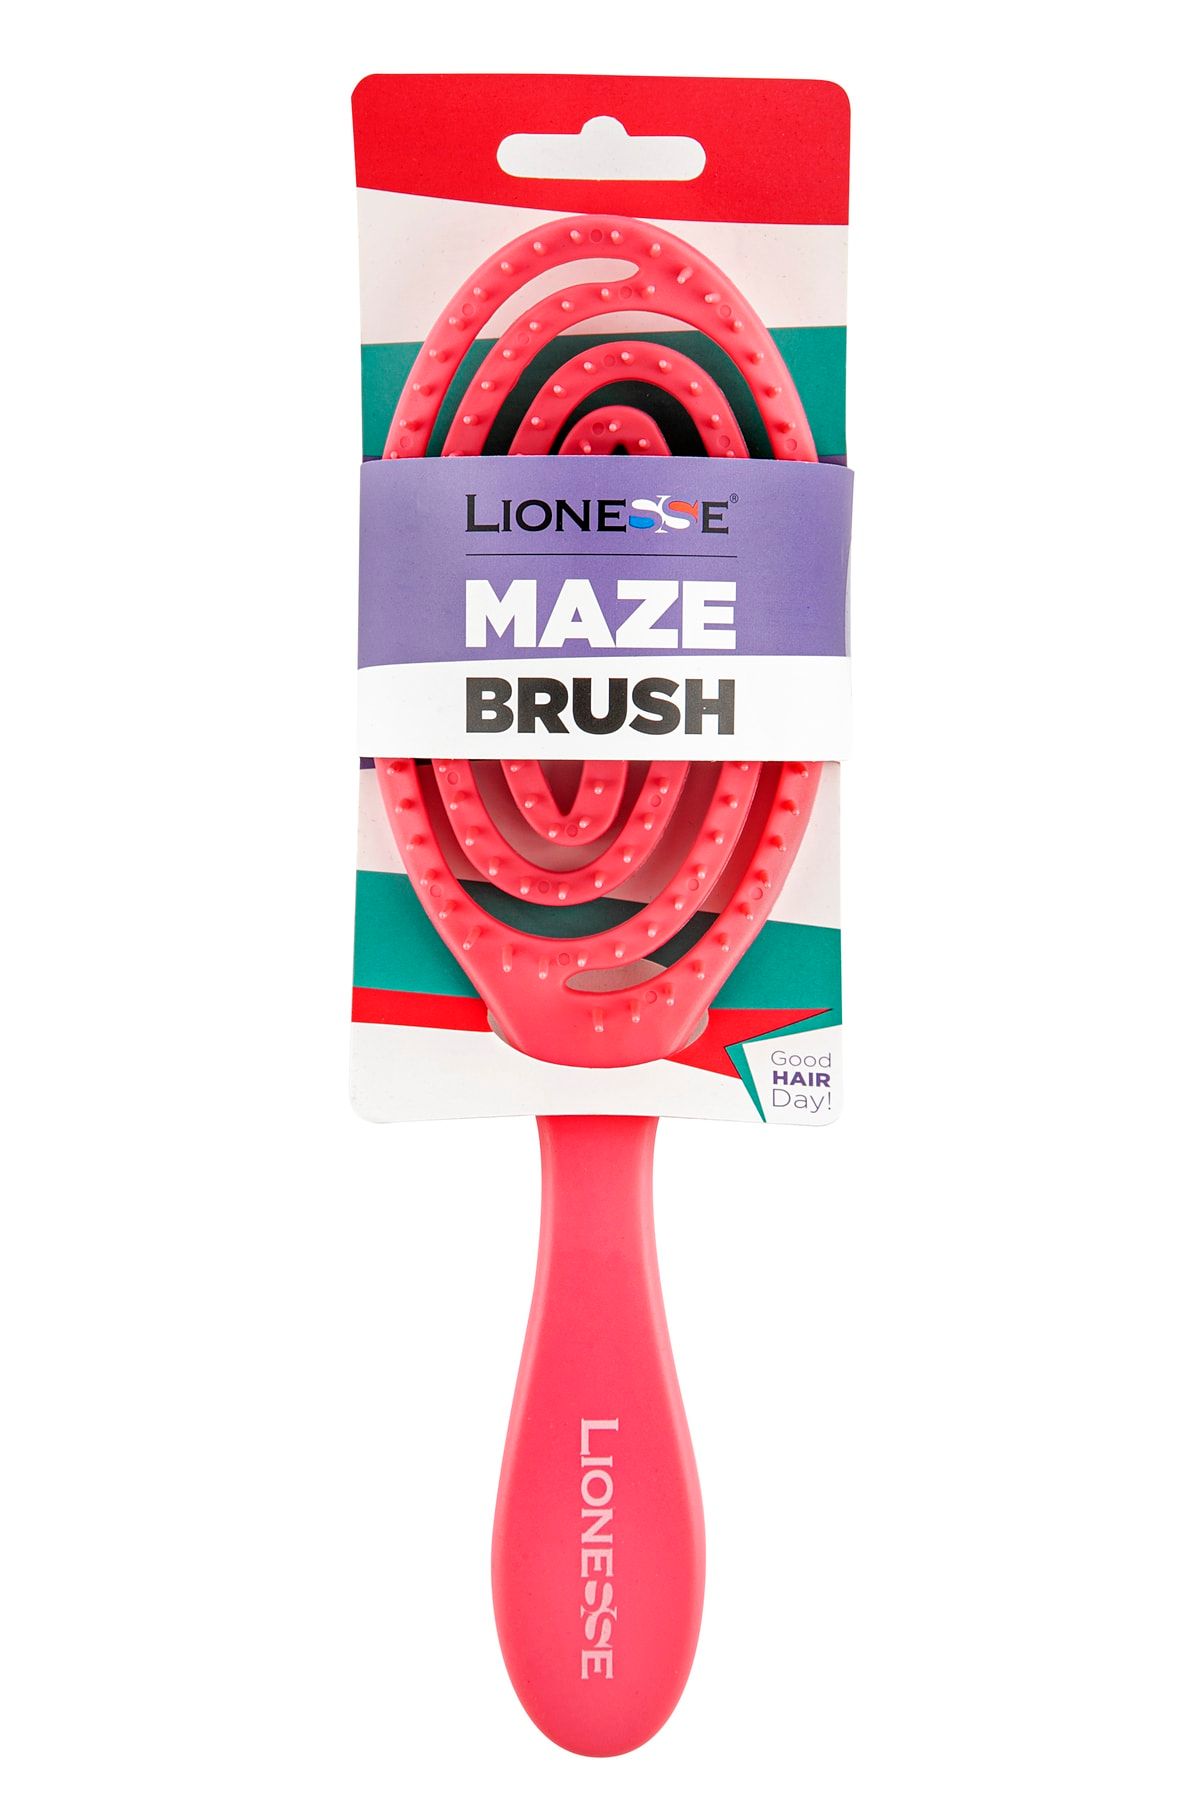 Lionesse Maze Brush 6452